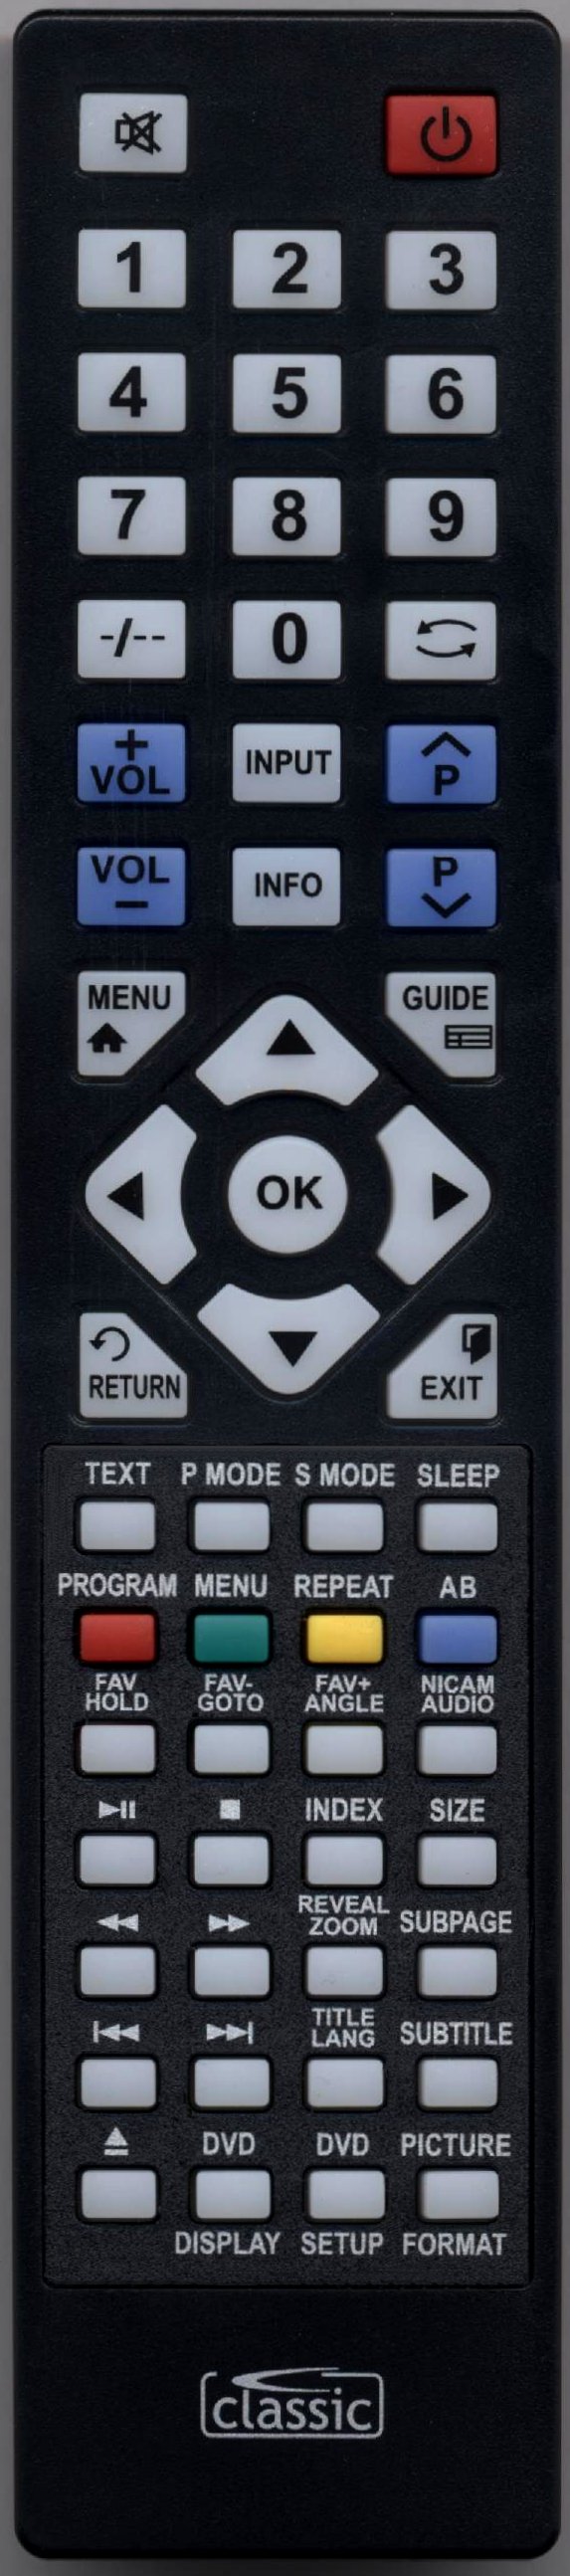 UMC X26/16A-GB-TCDUK Remote Control